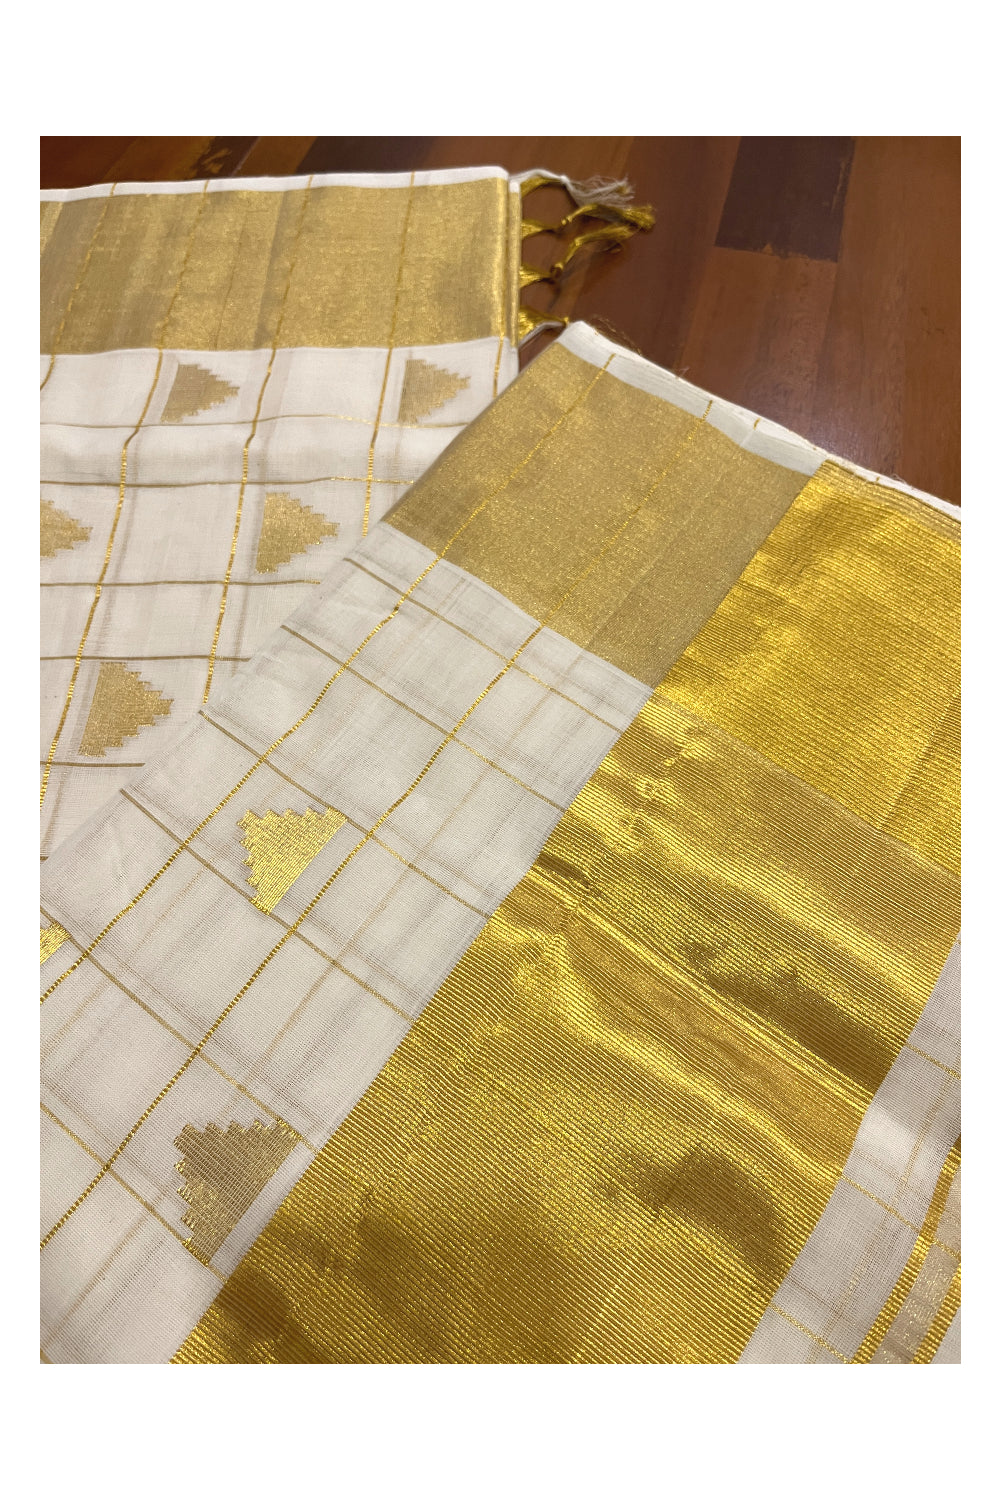 Southloom Premium Handloom Cotton Check Saree Temple Work Across Body